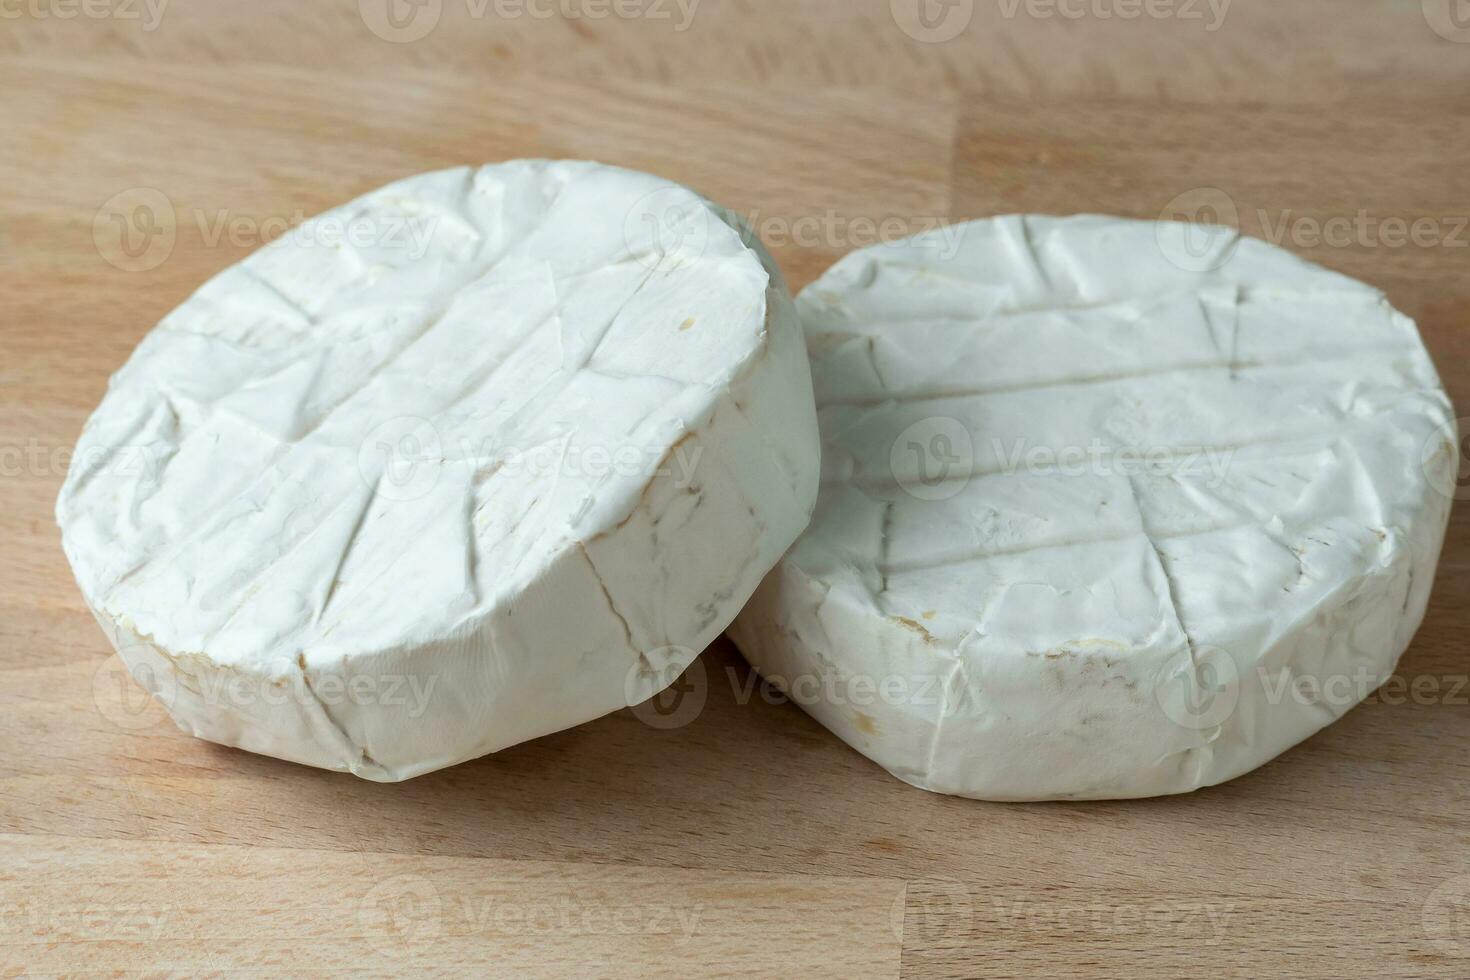 dos queso Camembert queso. preparación para interrogatorio intenso foto